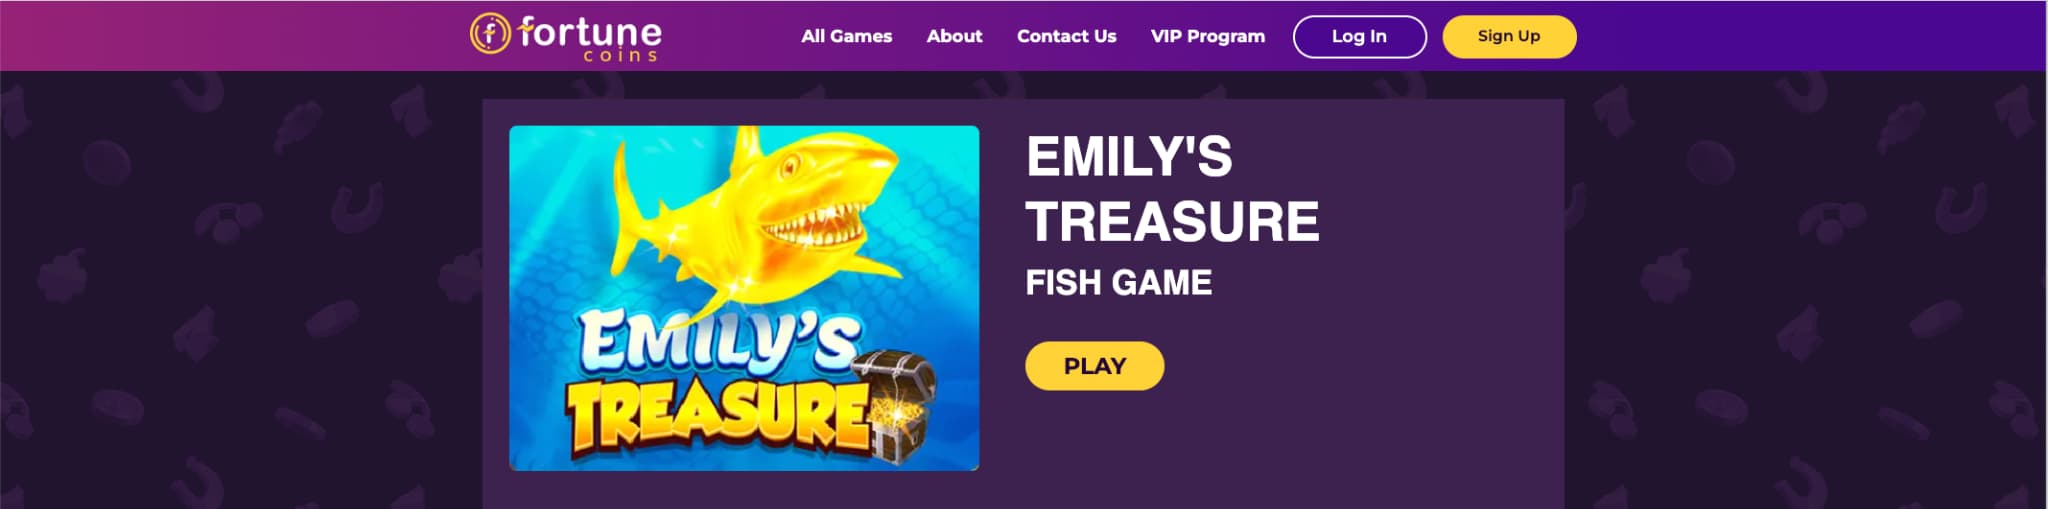 emily's treasure fish game